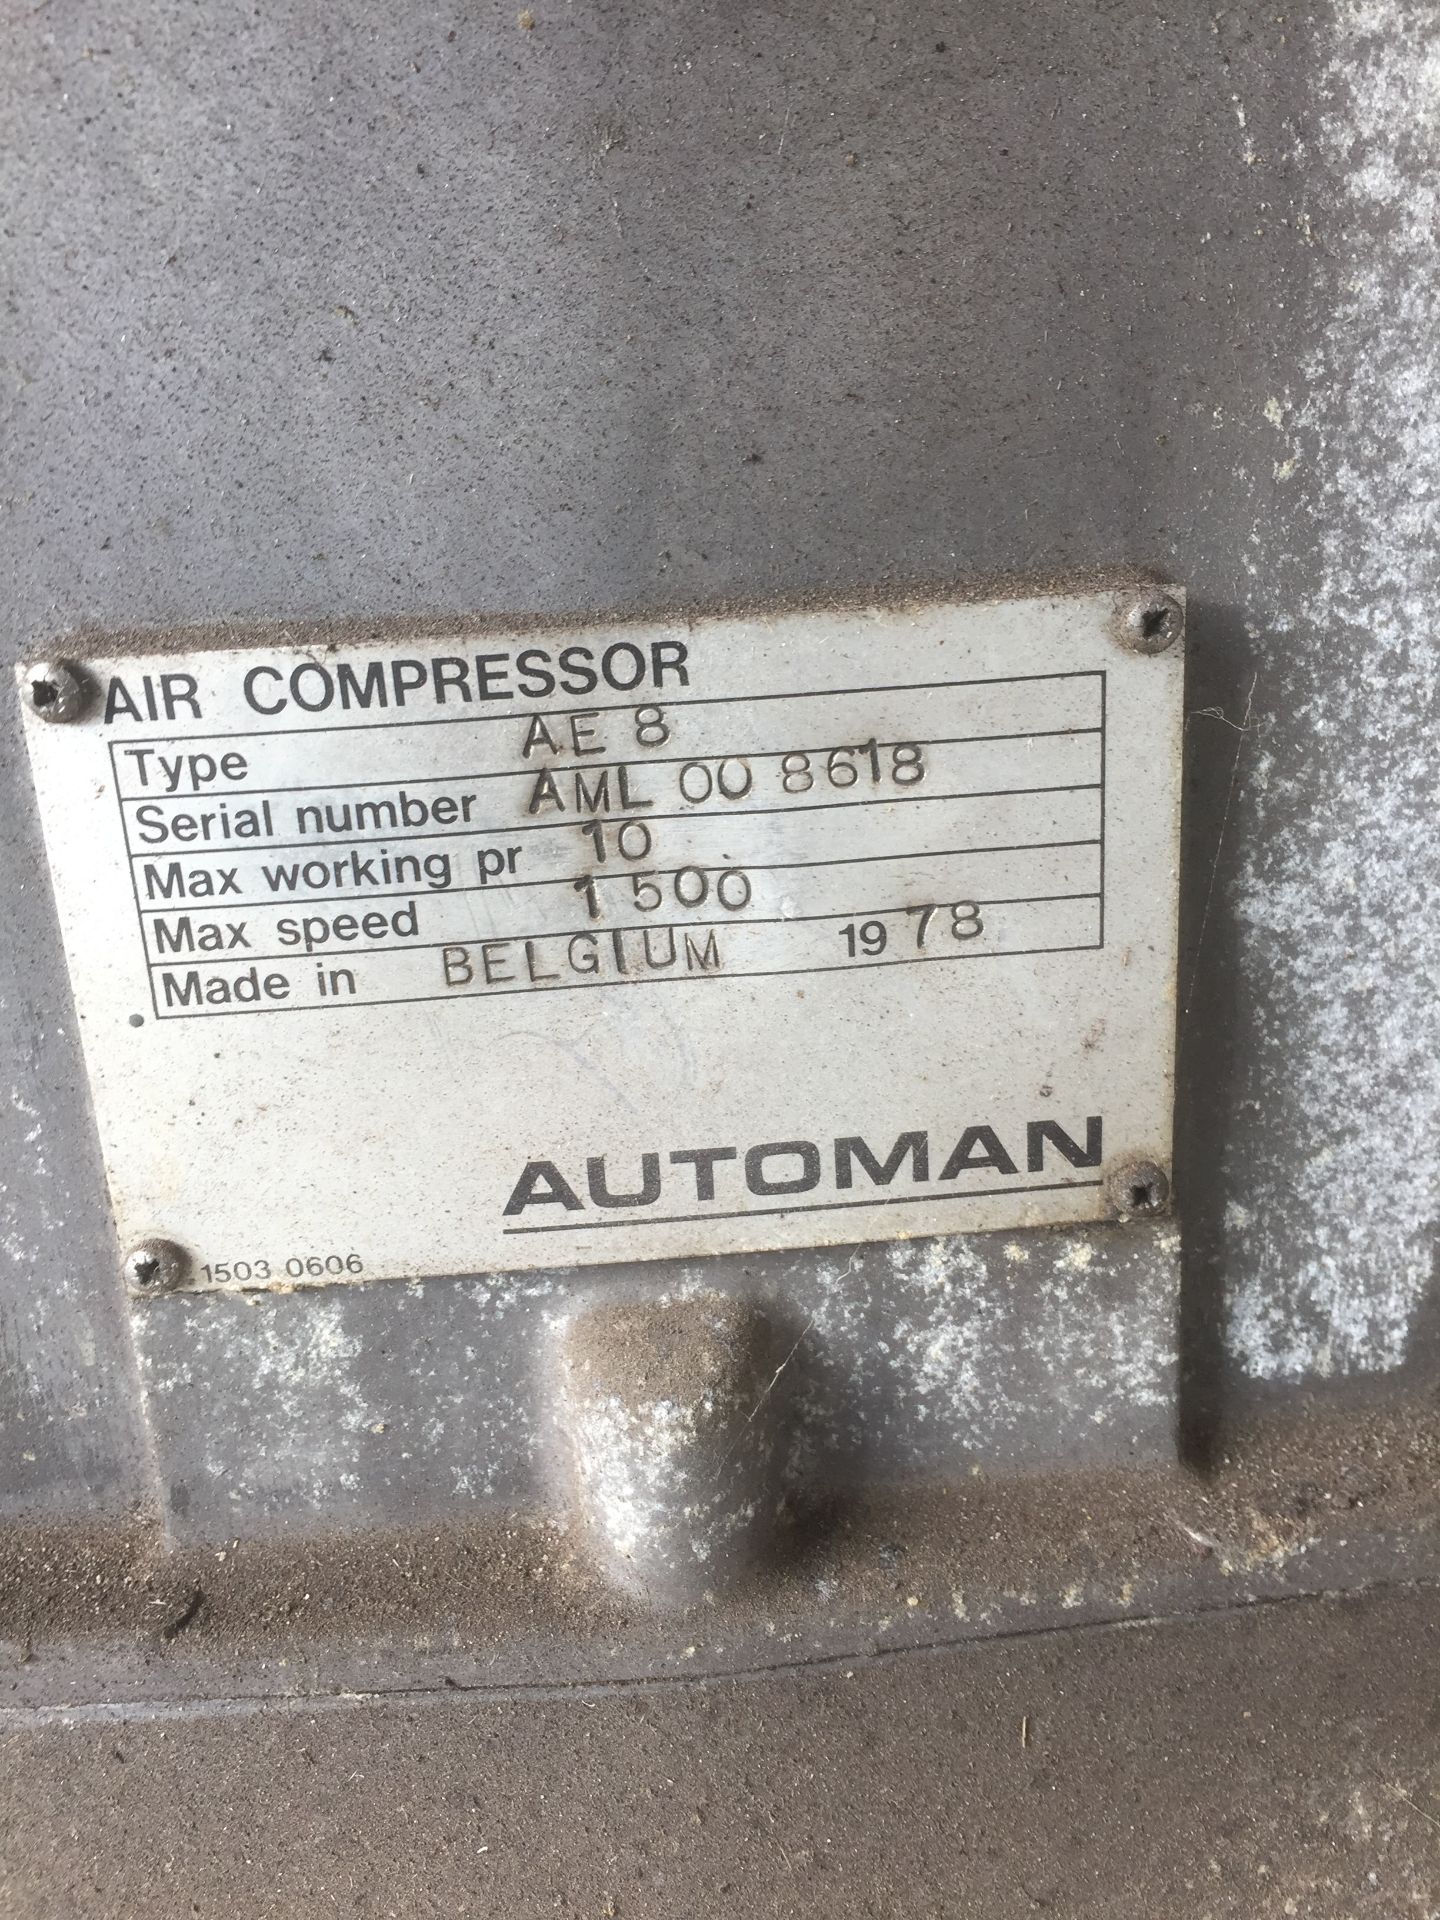 Automan AE8 twin cylinder receiver mounted air compressor, Serial No. AML008618 (1978), 10 BAR - Bild 2 aus 2